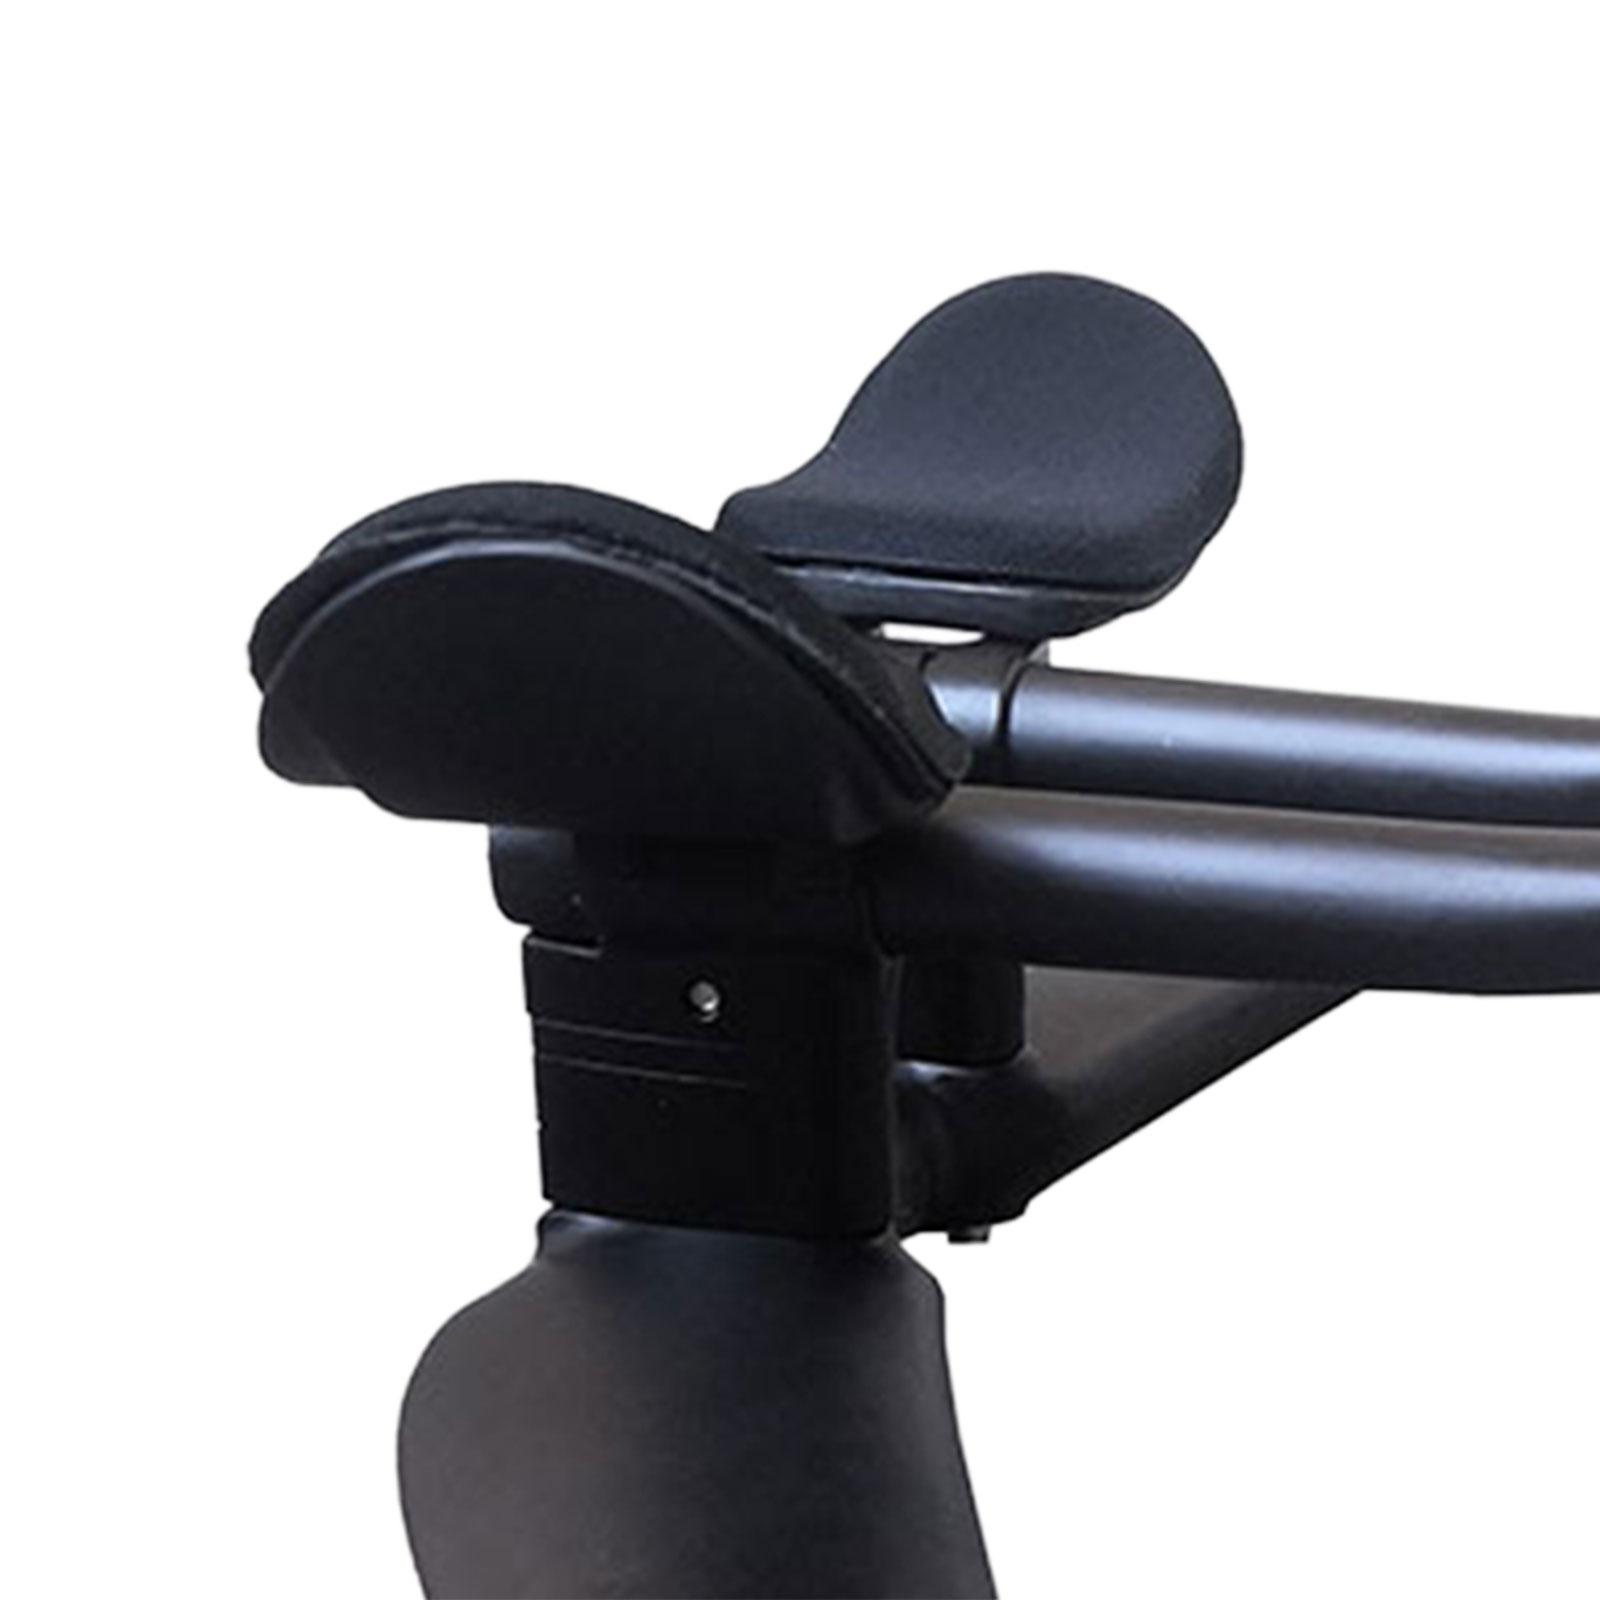 Bike Arm Rest Bar 400/420/440mm for Long Distance Riding Mountain Bikes Accs 400mm